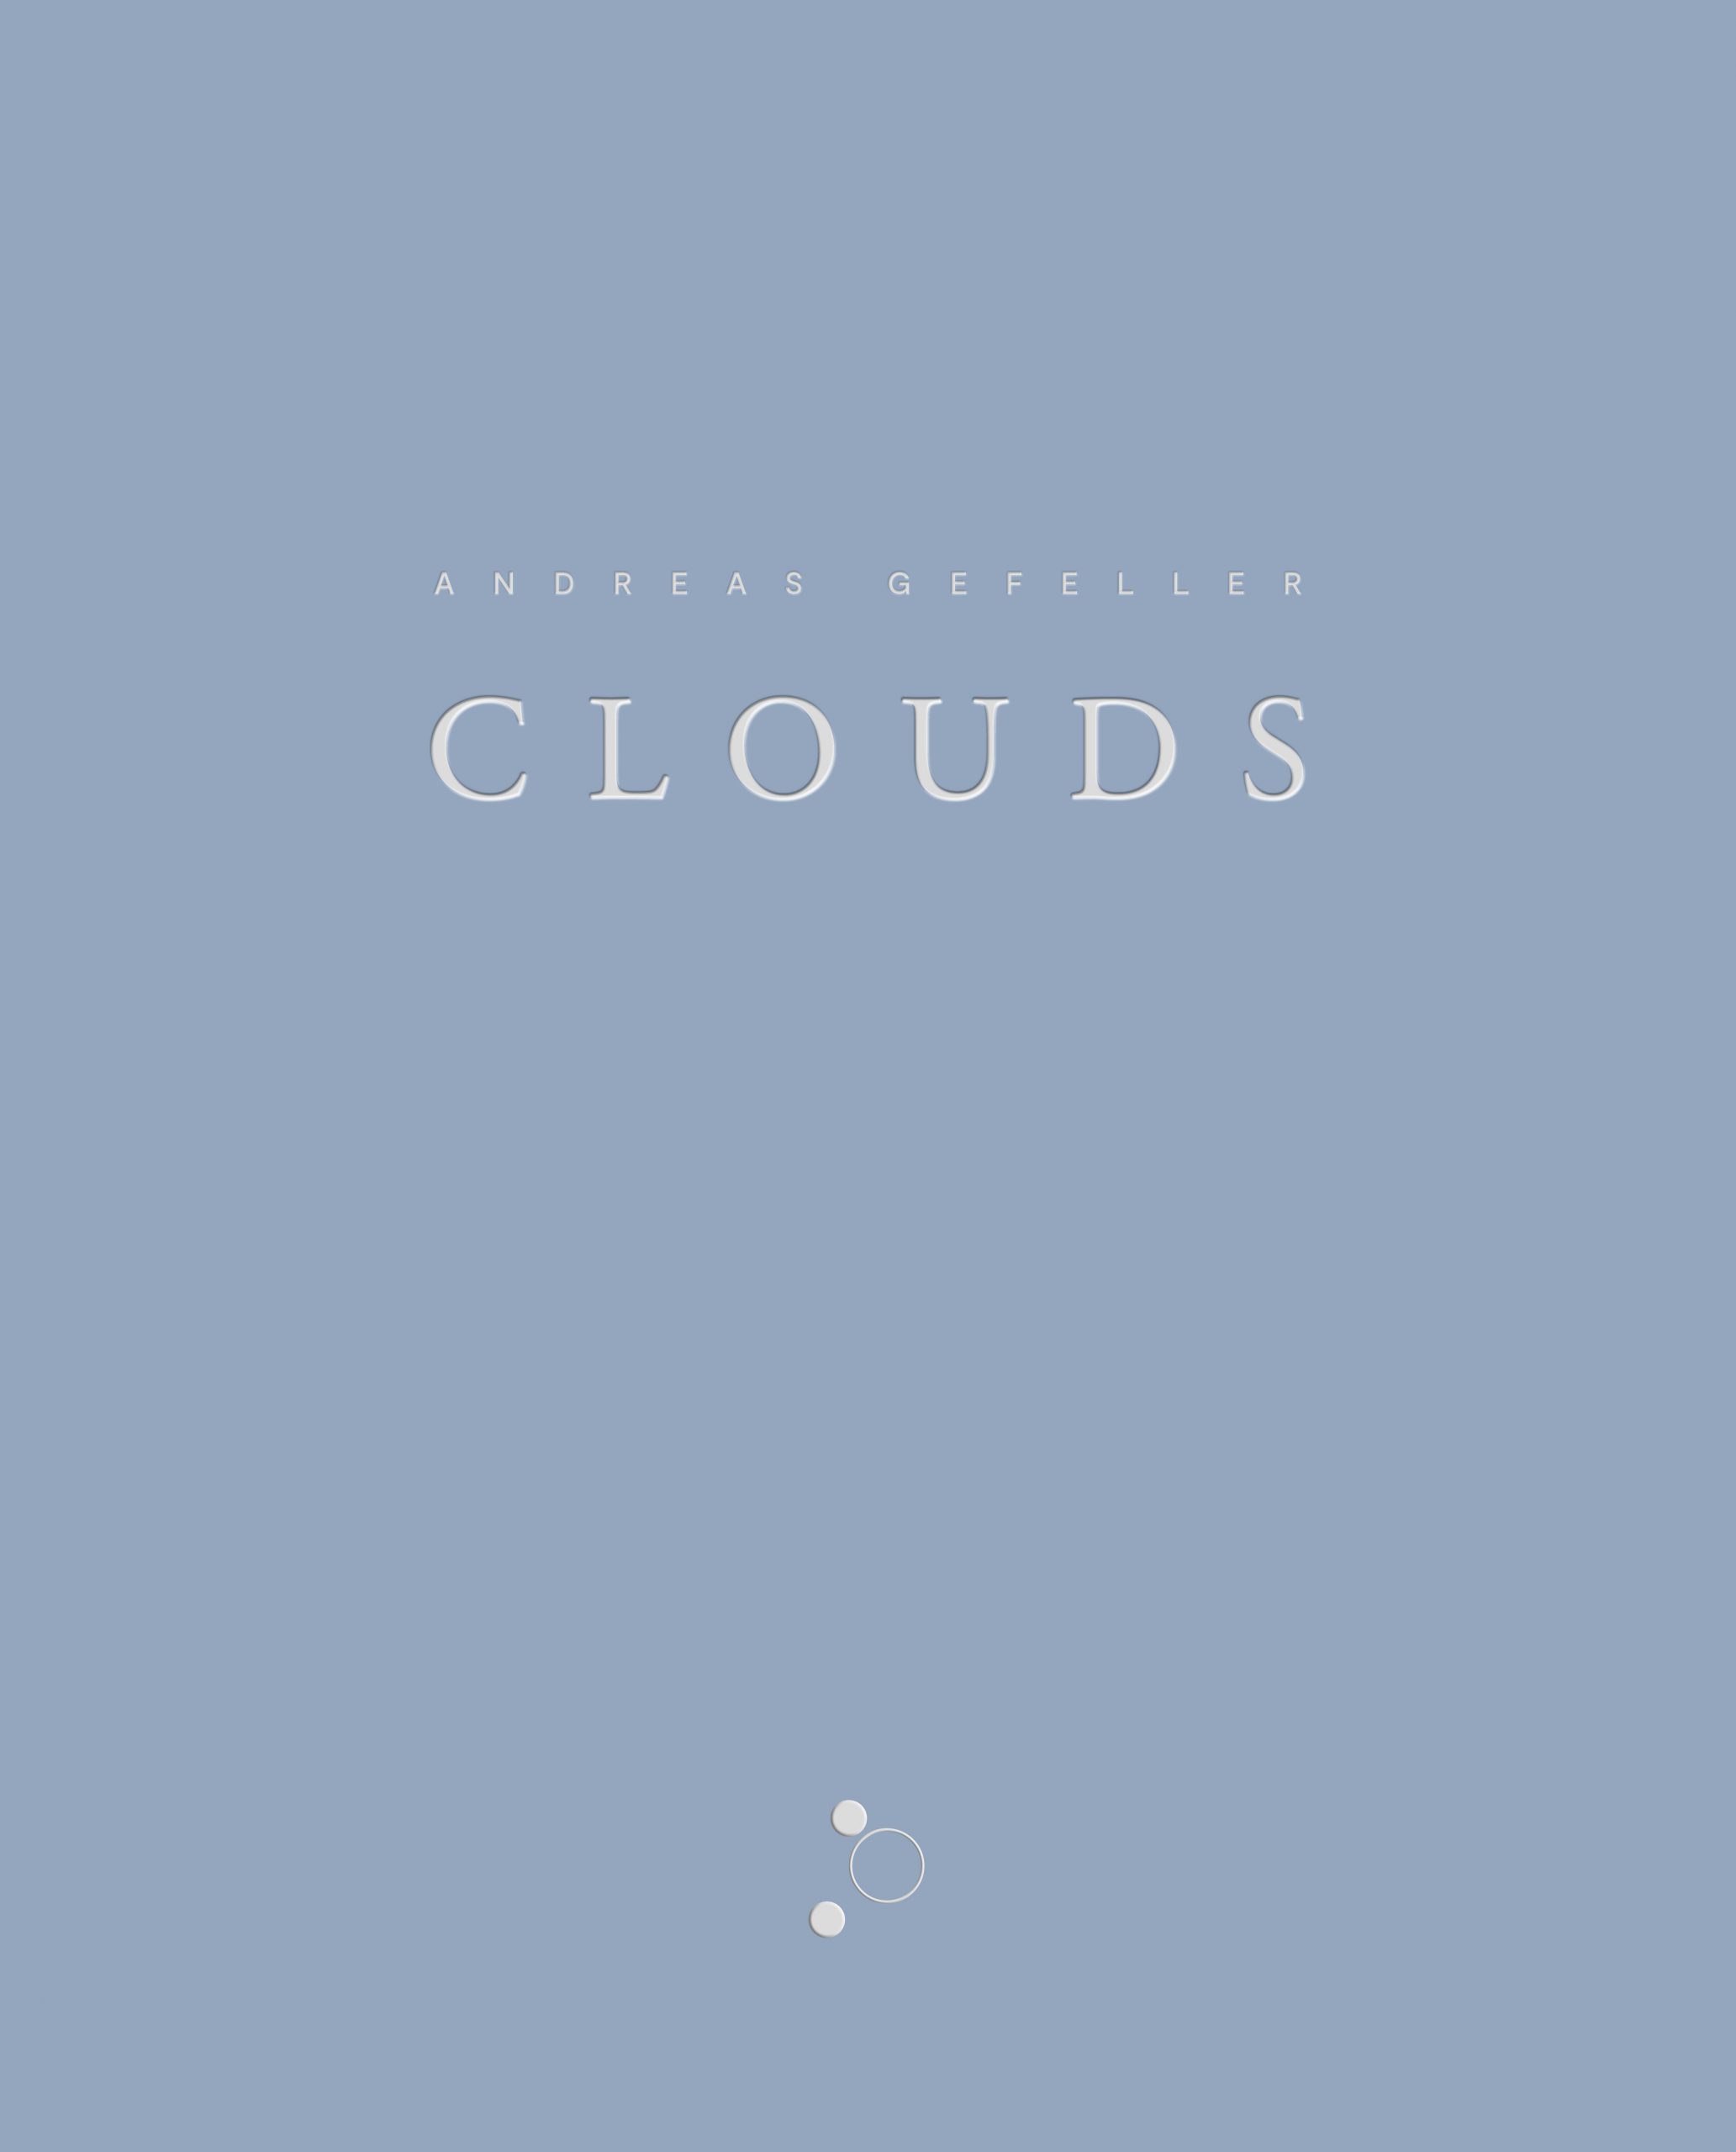 Clouds Portfolio cover Gefeller